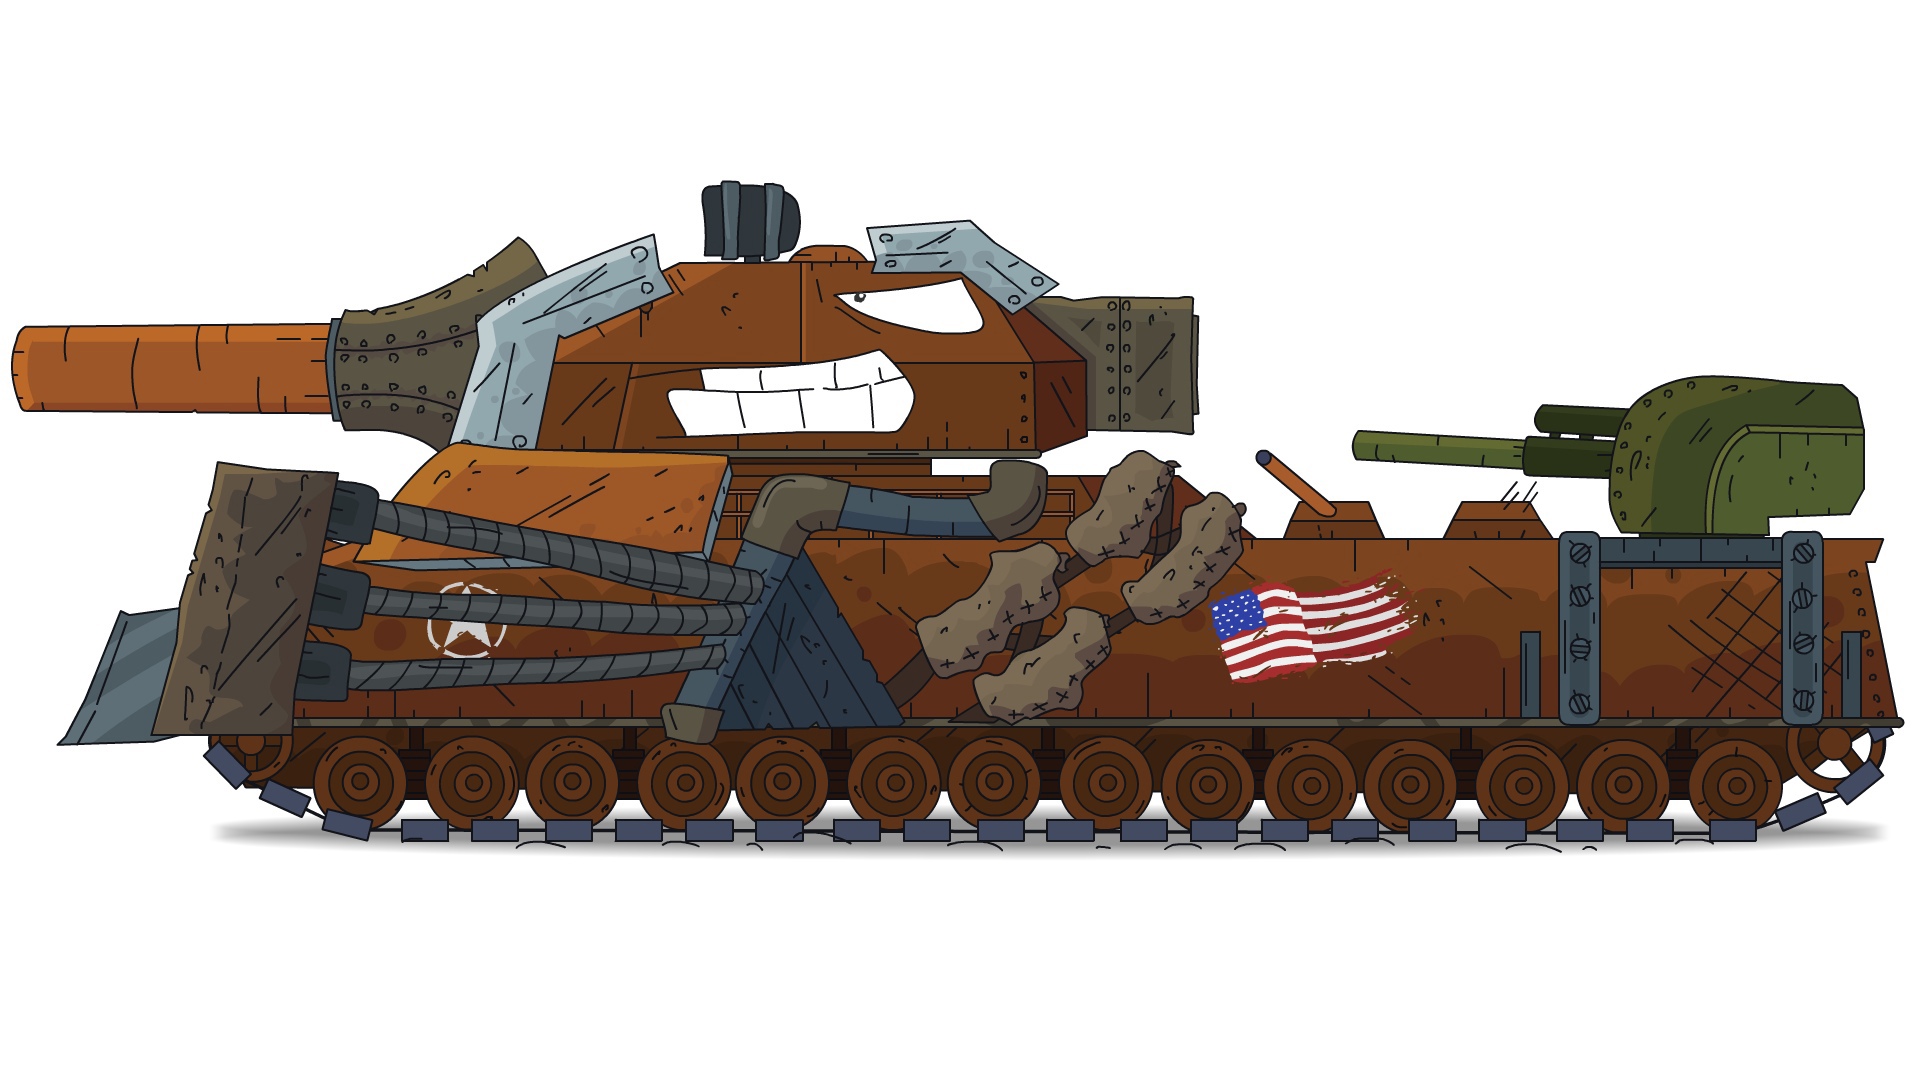 Ратте танк геранд. Танк кв 44 РАТТЕ. Кв-44 танк Геранд. Танк американский РАТТЕ.